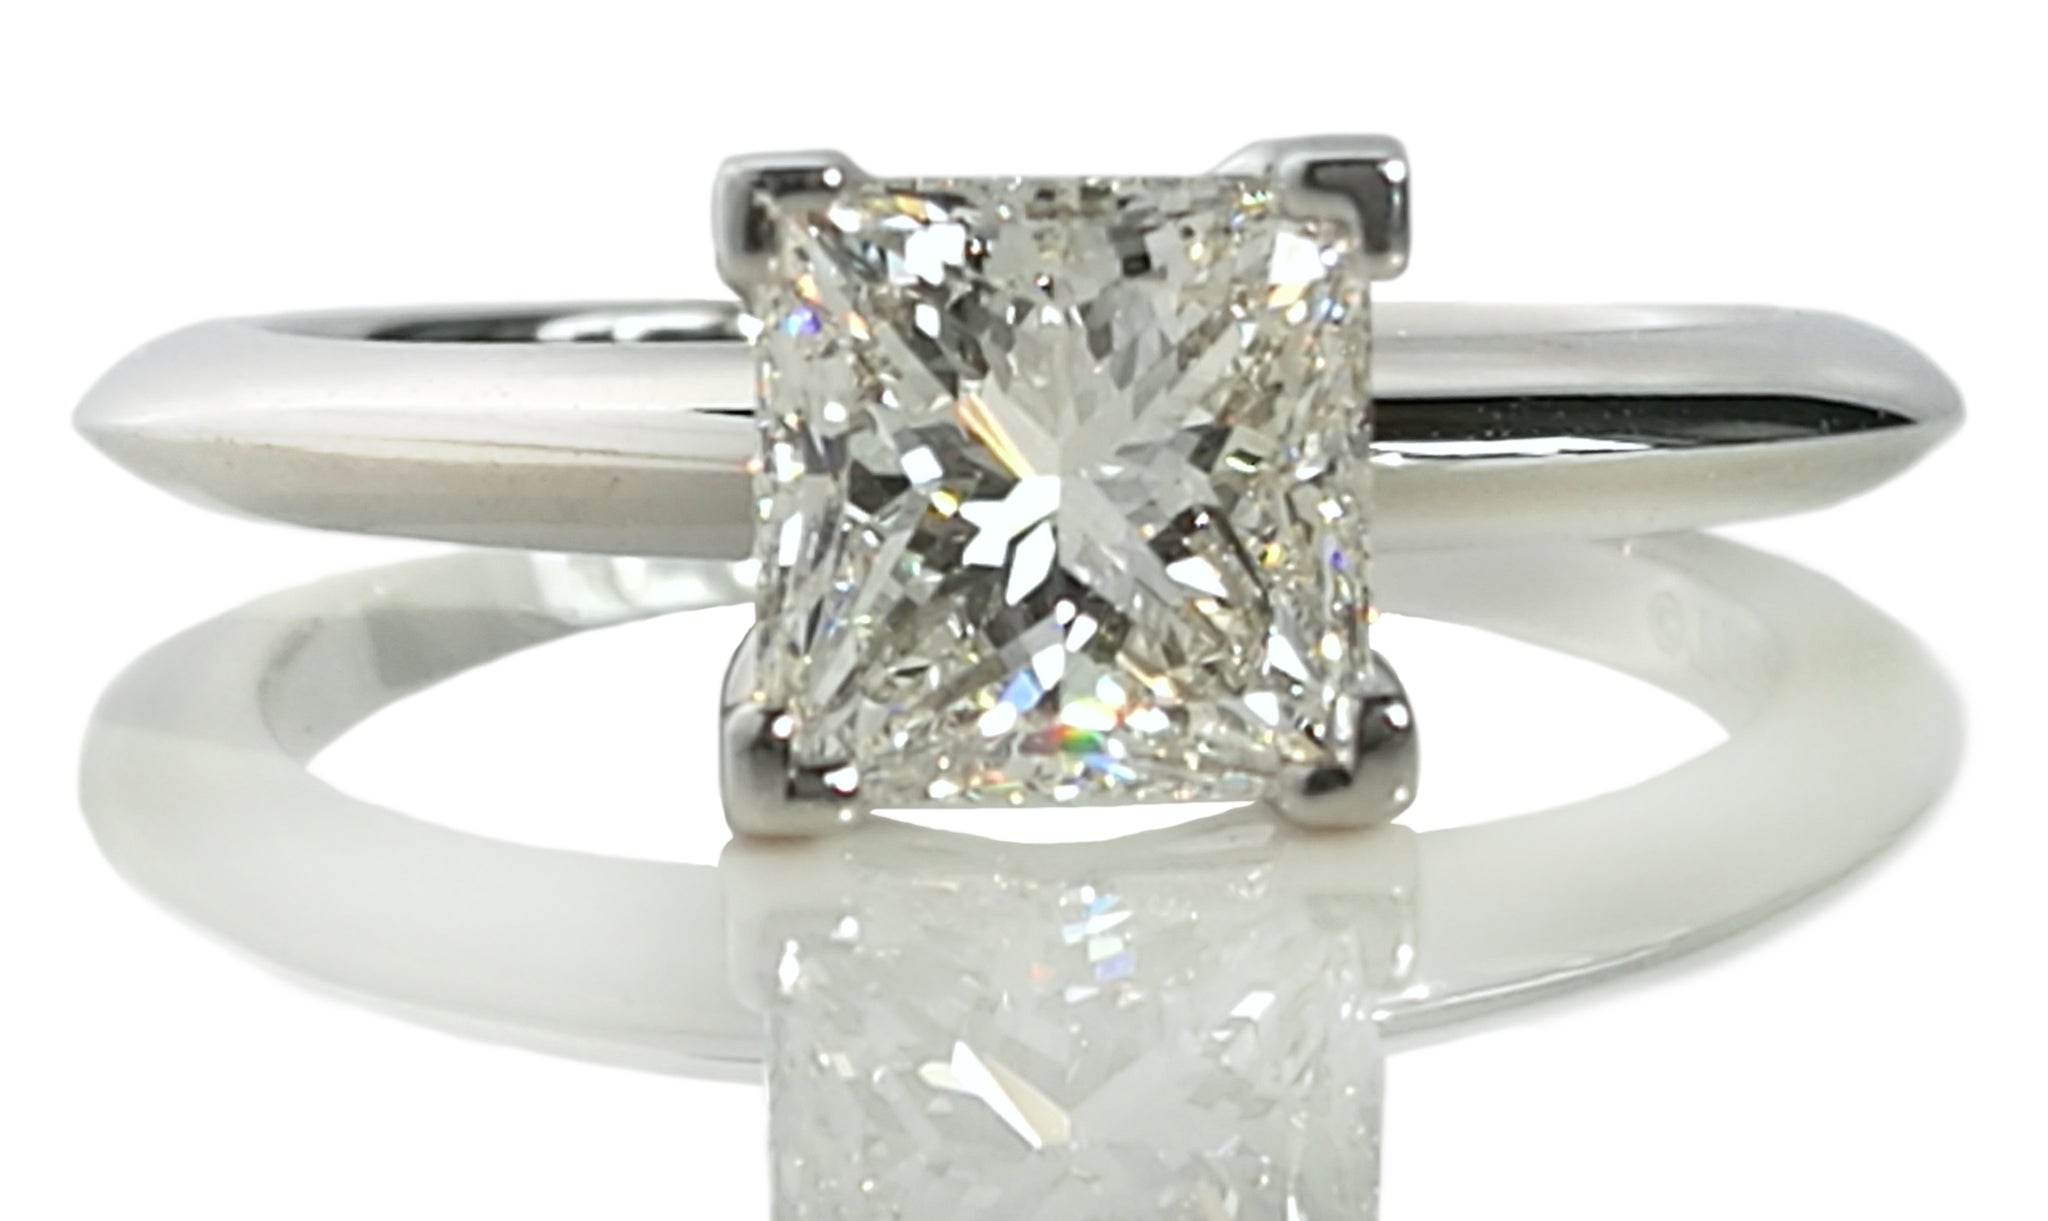  Tiffany  Co 1 01ct G VVS2 Princess  Cut  Diamond 